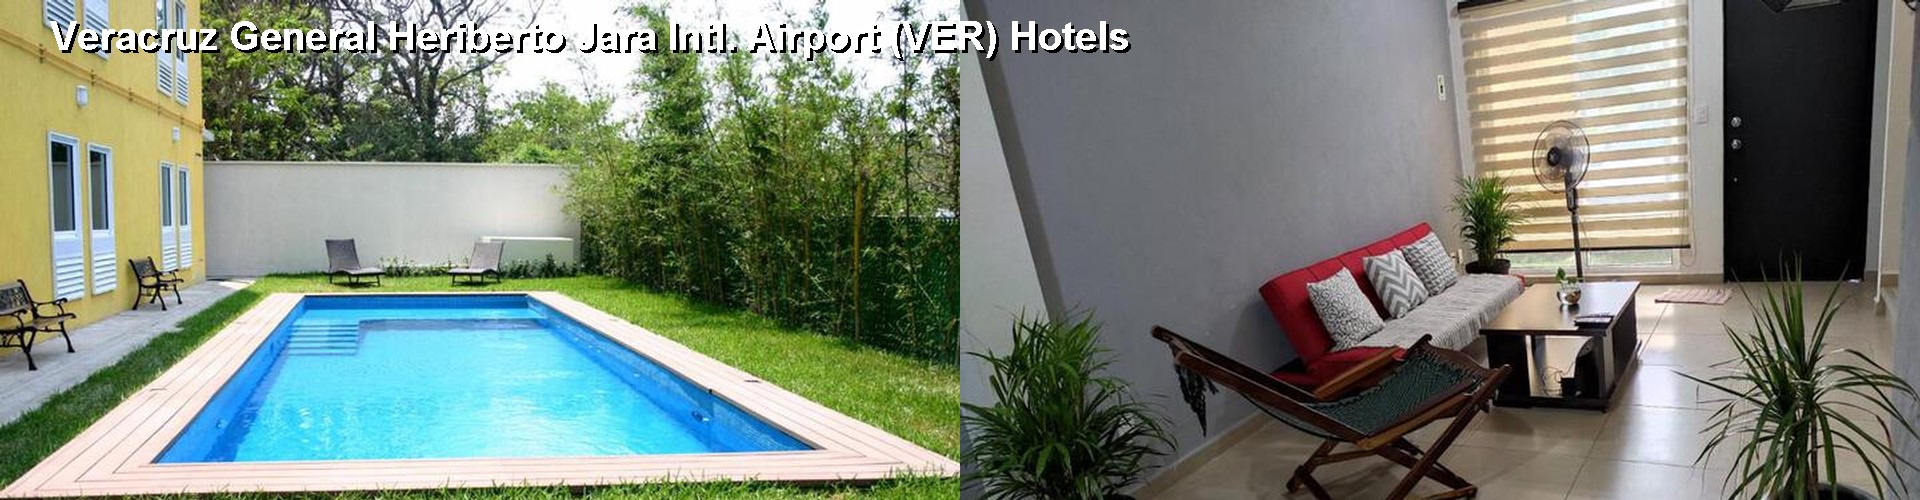 4 Best Hotels near Veracruz General Heriberto Jara Intl. Airport (VER)